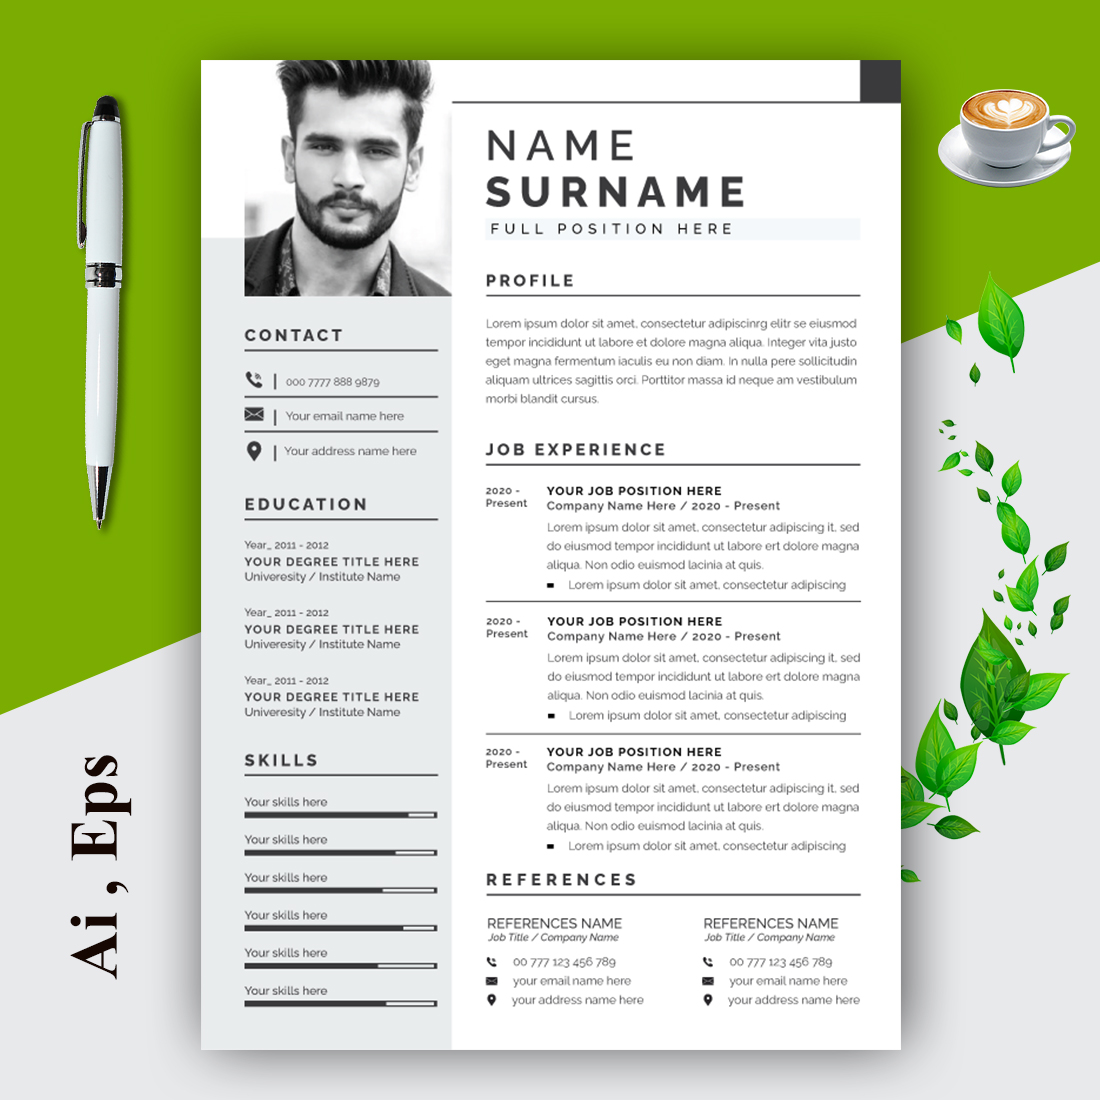 Resume Design Template Black & White cover image.